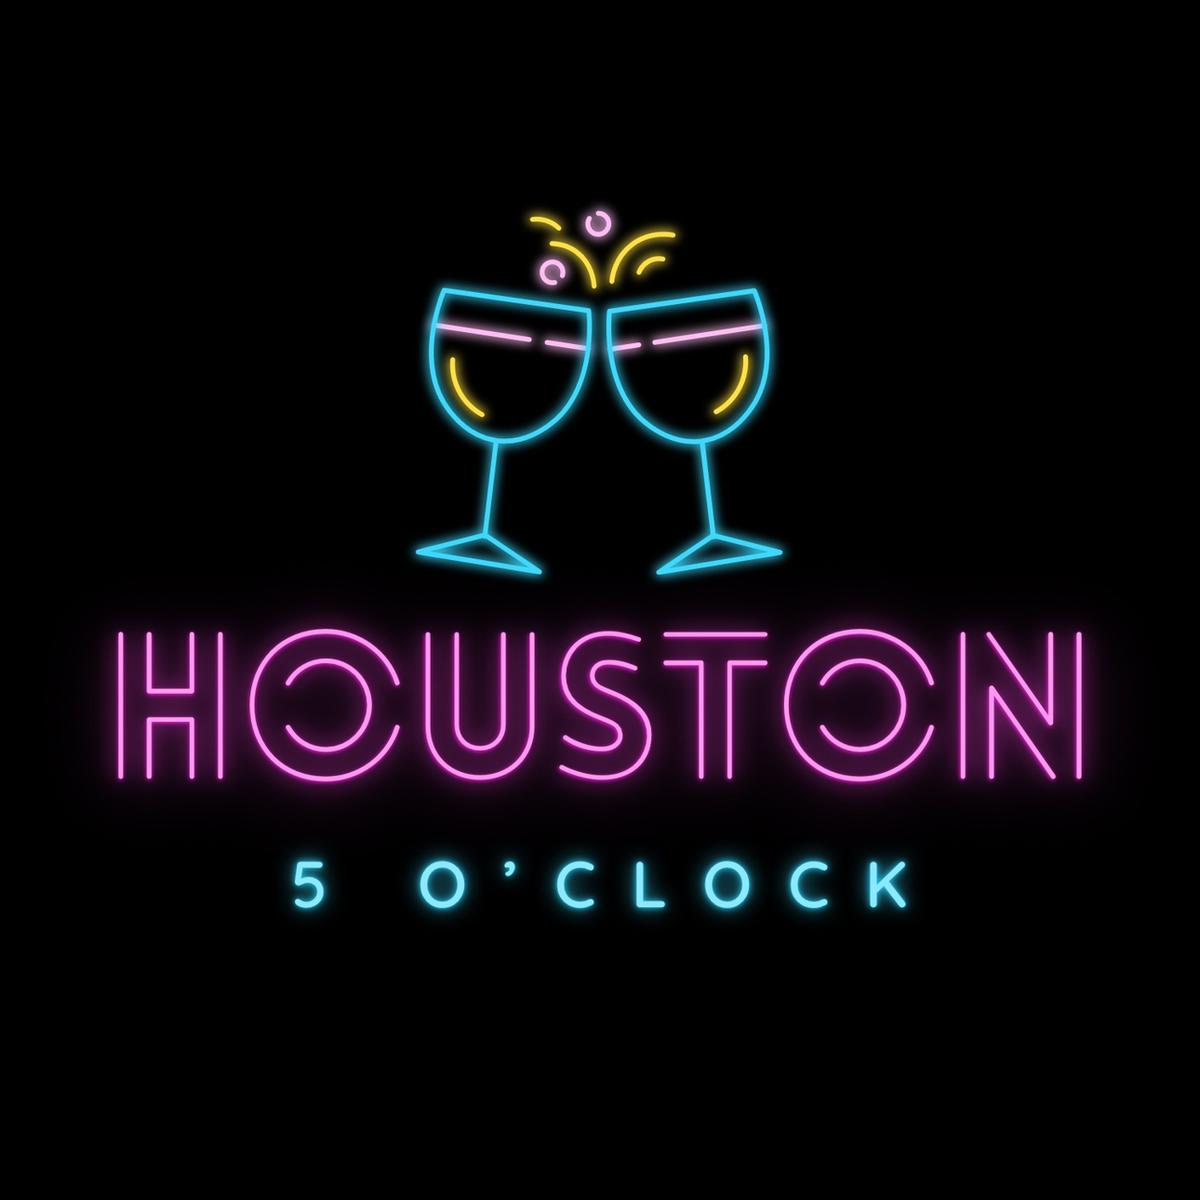 Houston5oclock's images